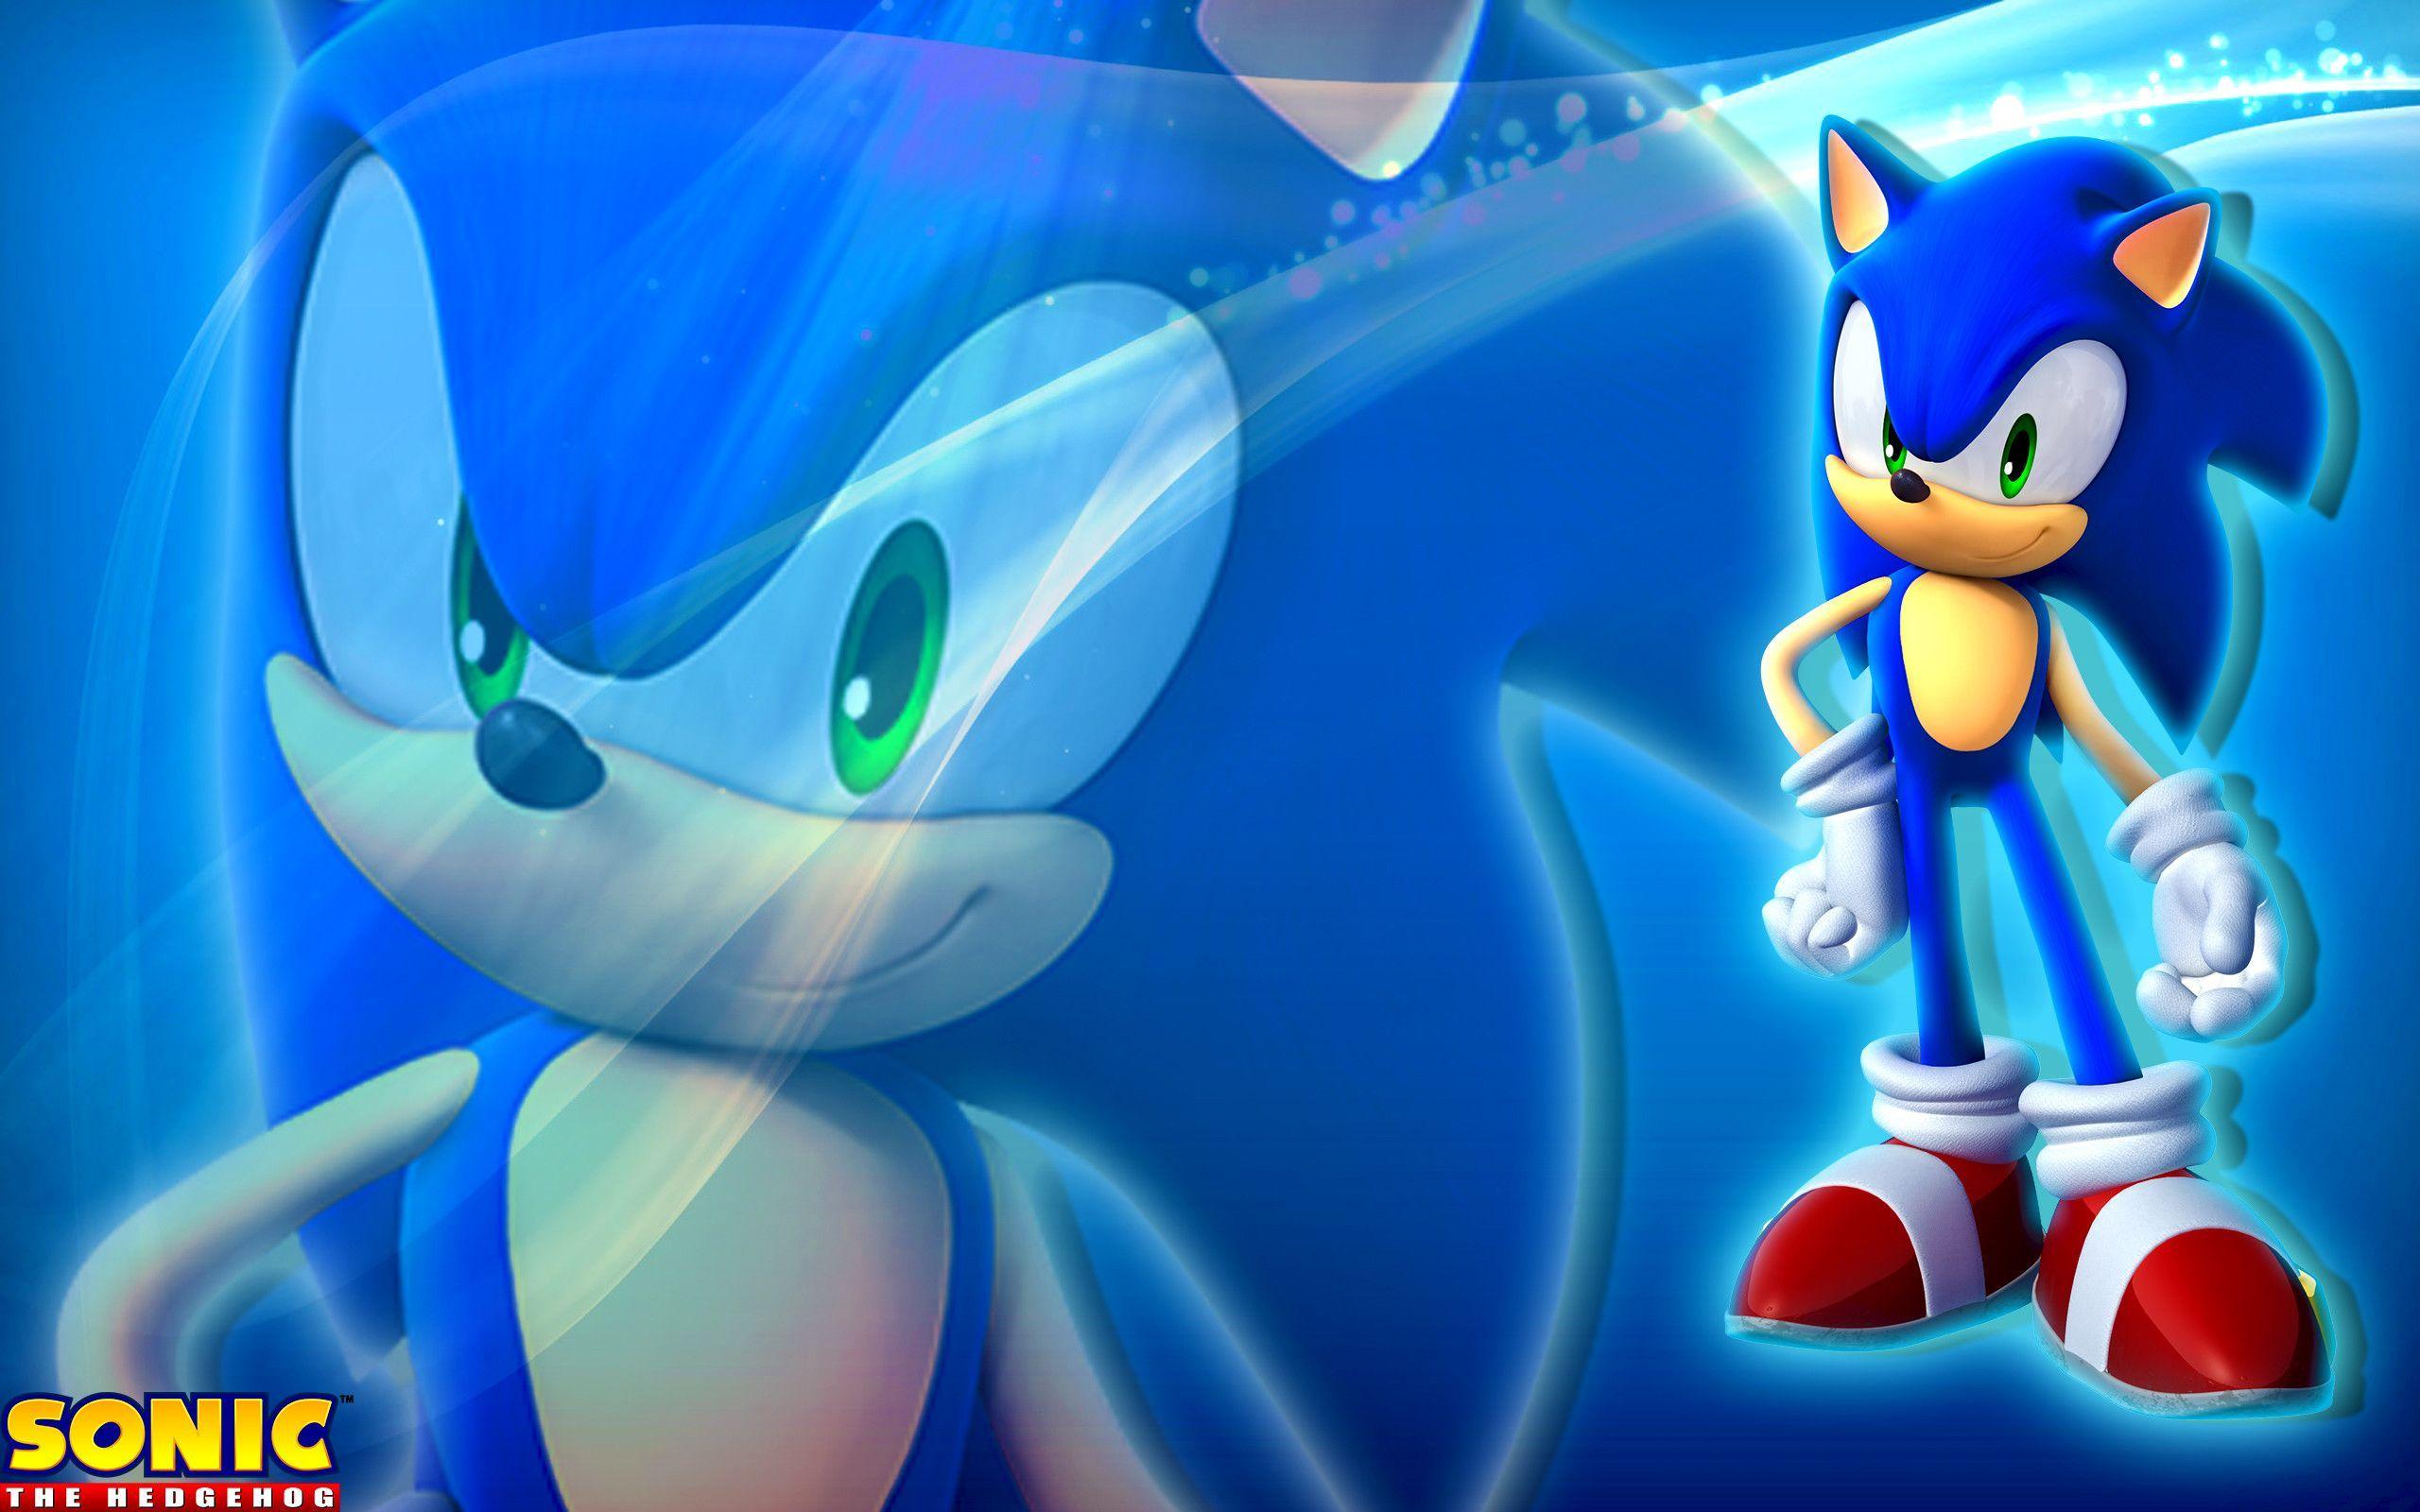 Sonic The Hedgehog Wallpaper. HD Background Wallpaper